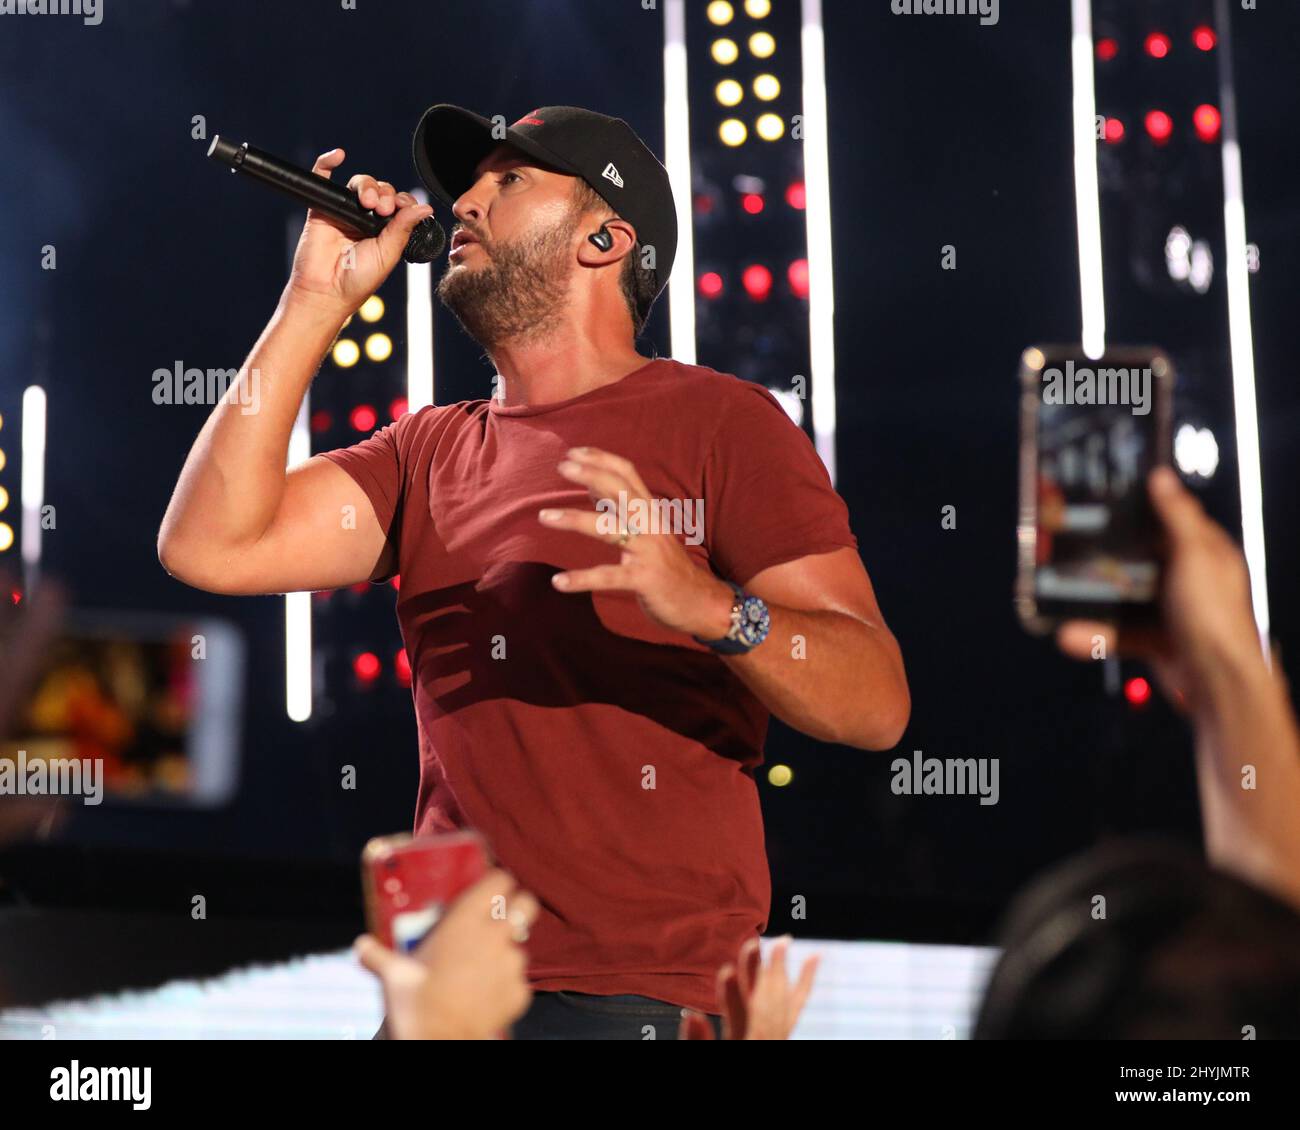 Luke Bryan at the CMA Music Festival held at the Nissan Stadium on June 9, 2019, in Nashville, TN. Stock Photo